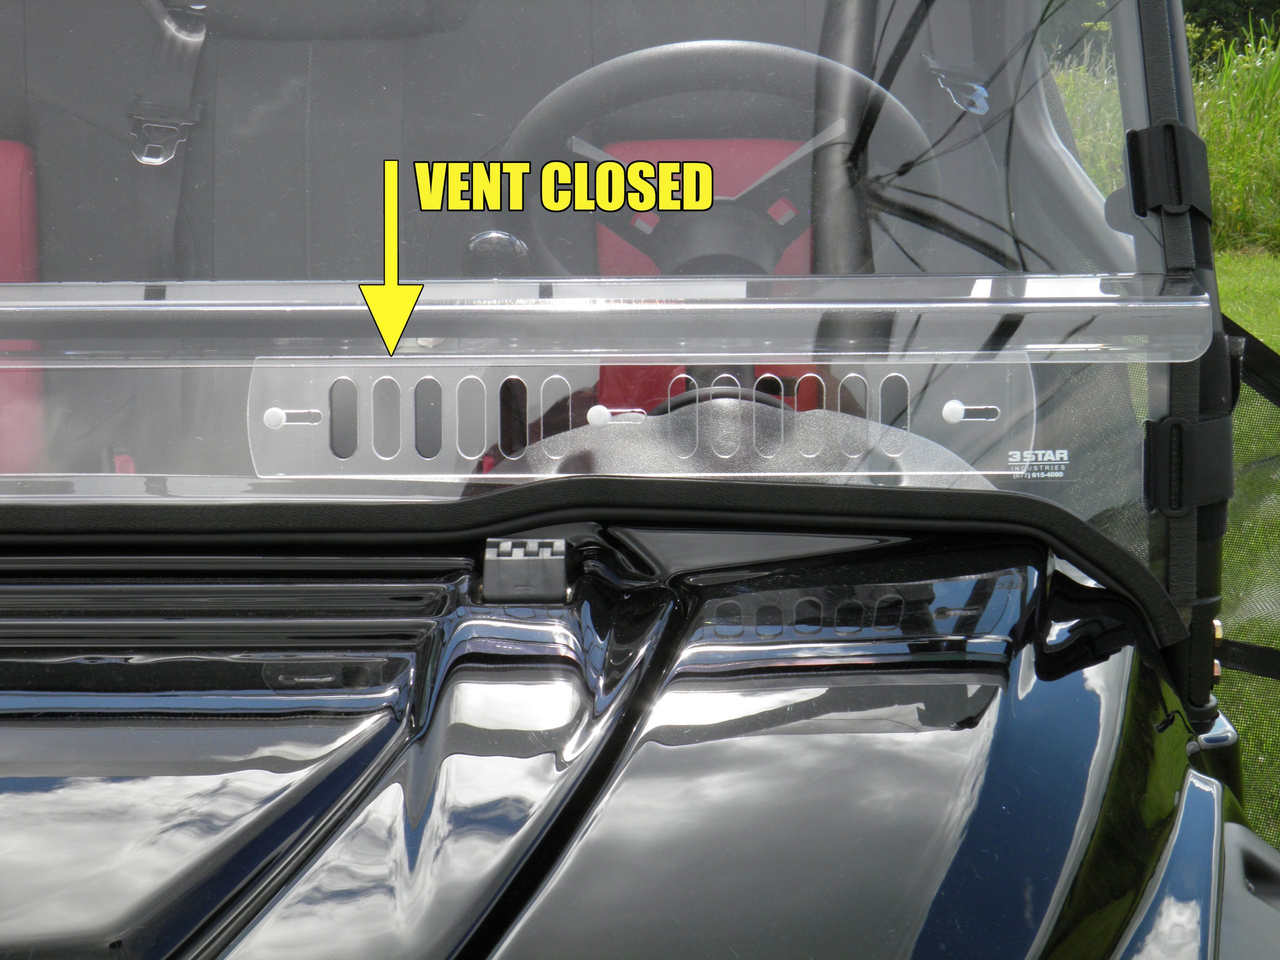 John Deere Gator XUV 550/560/590 2-Pc Windshield vents closed